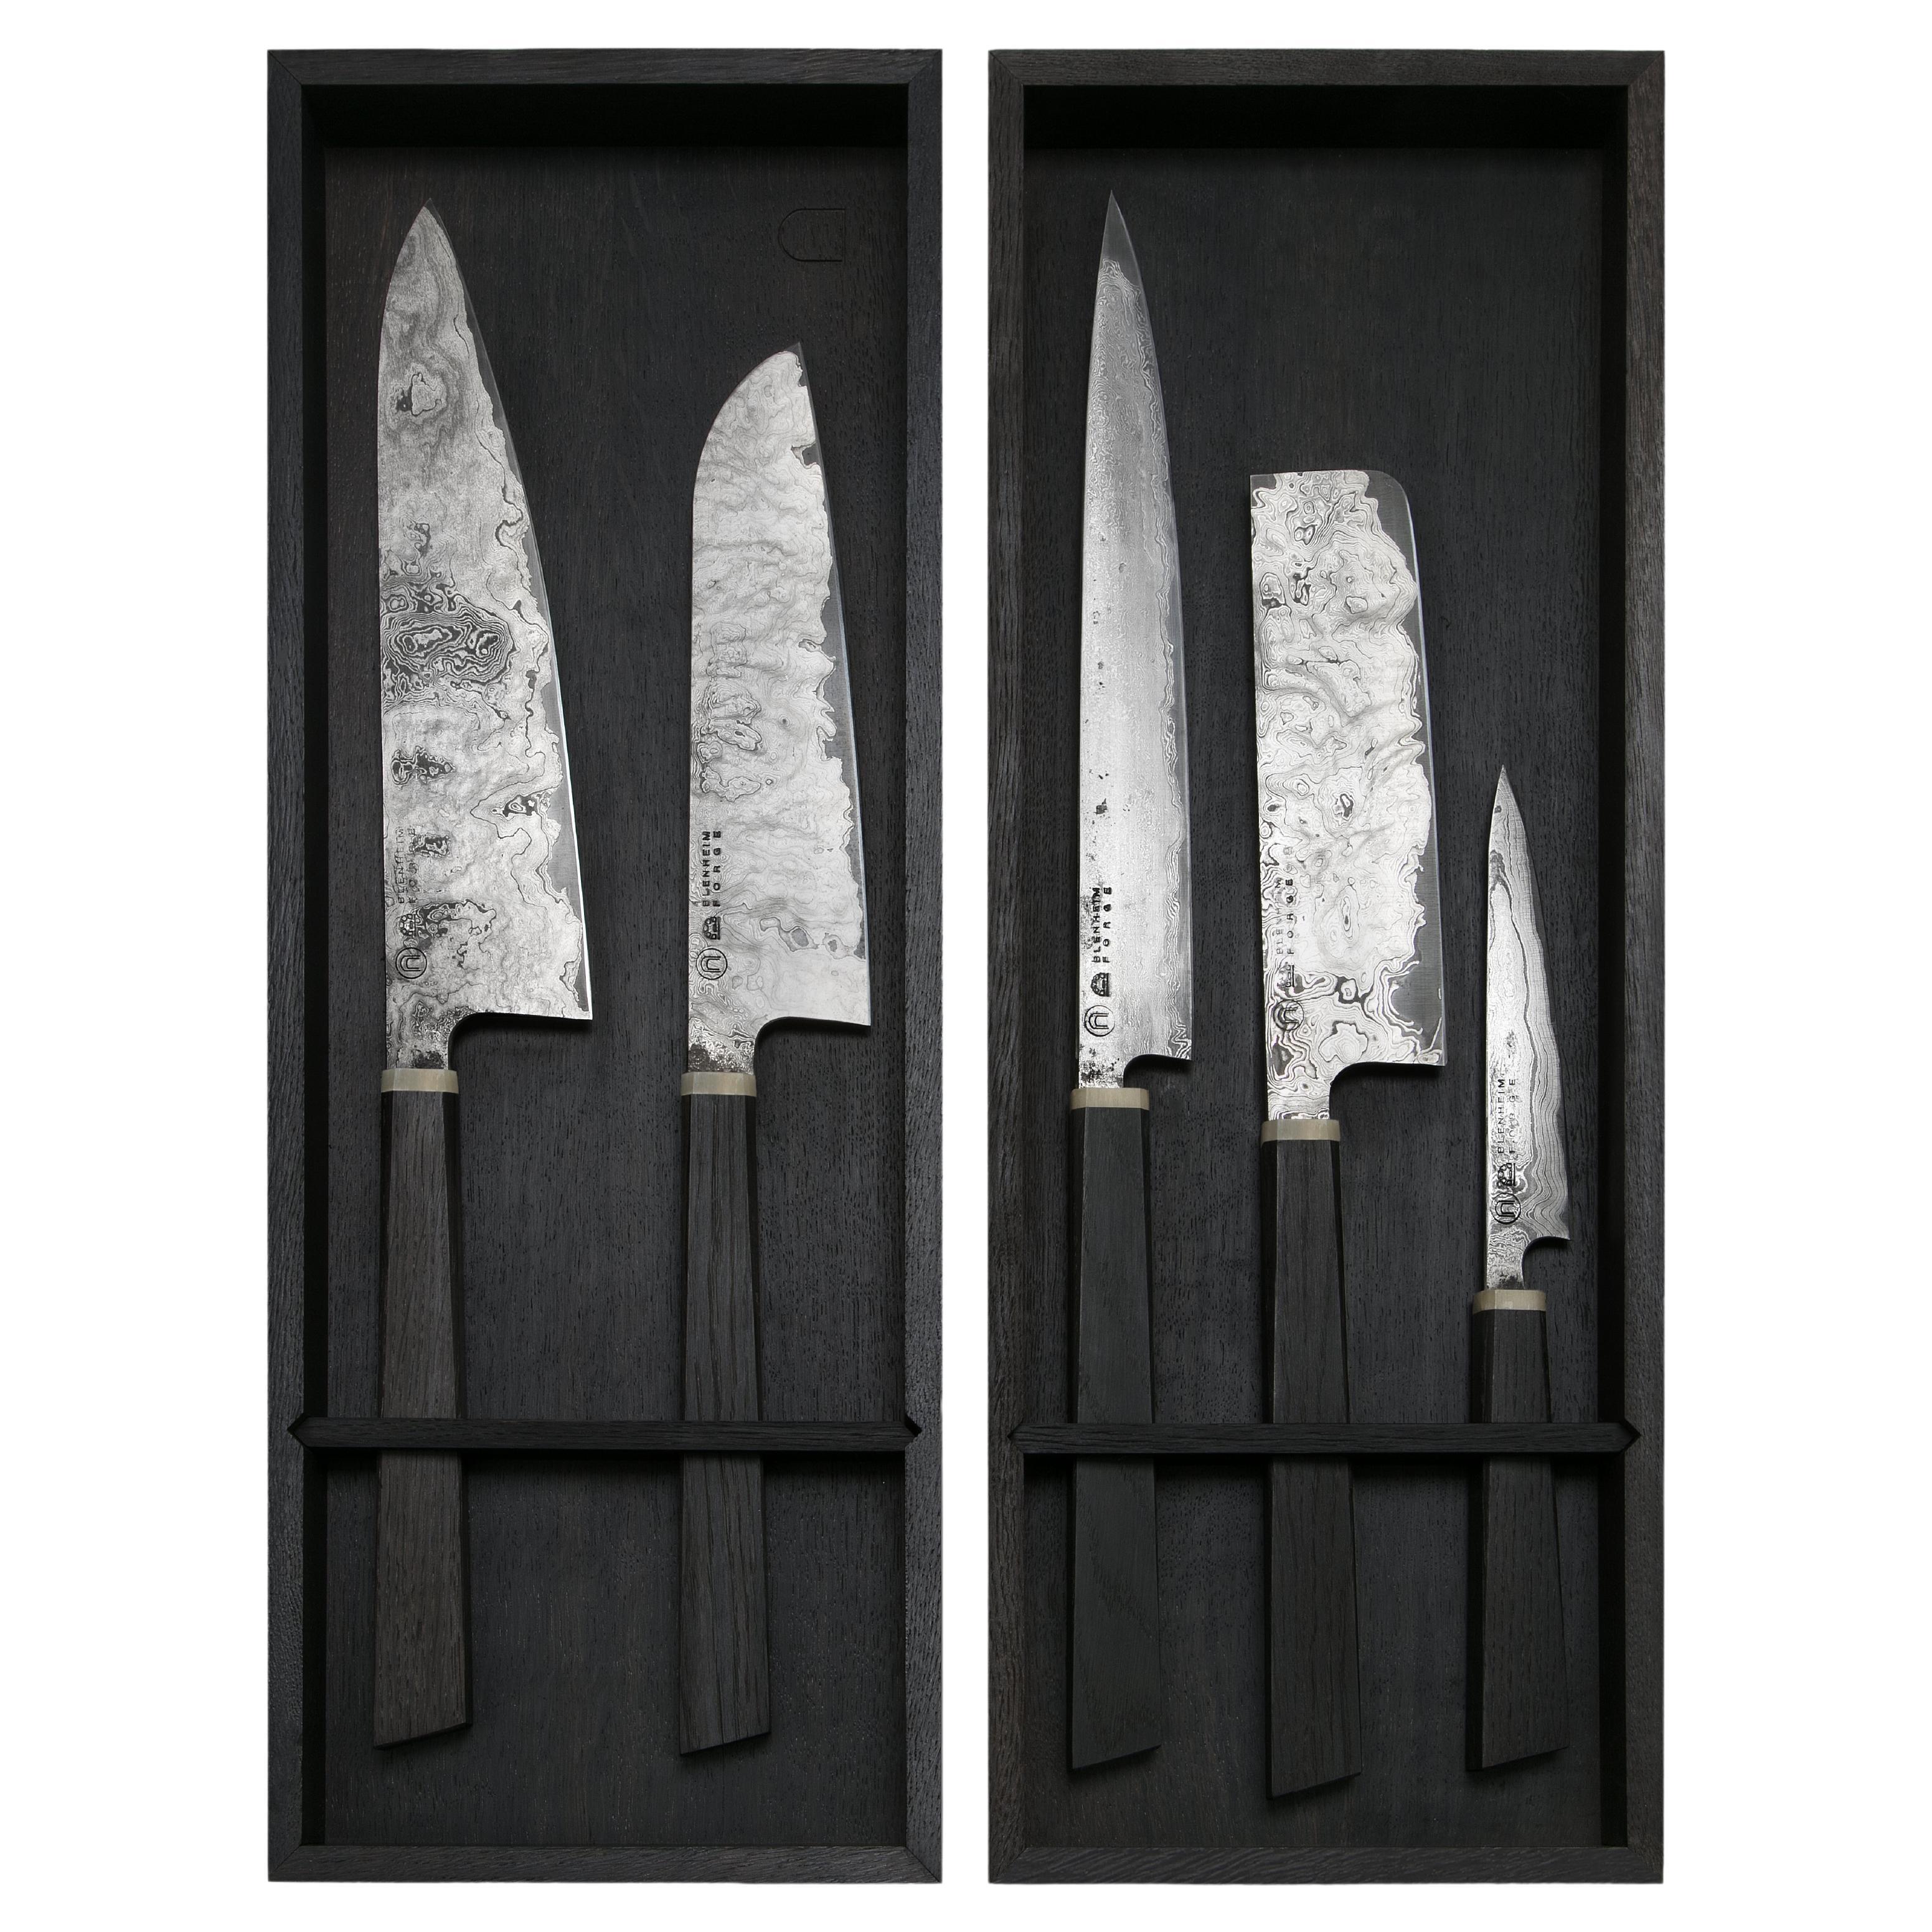 Tengoku 10-Piece Stainless Steel Chef Knife set, Blue Resin Handle